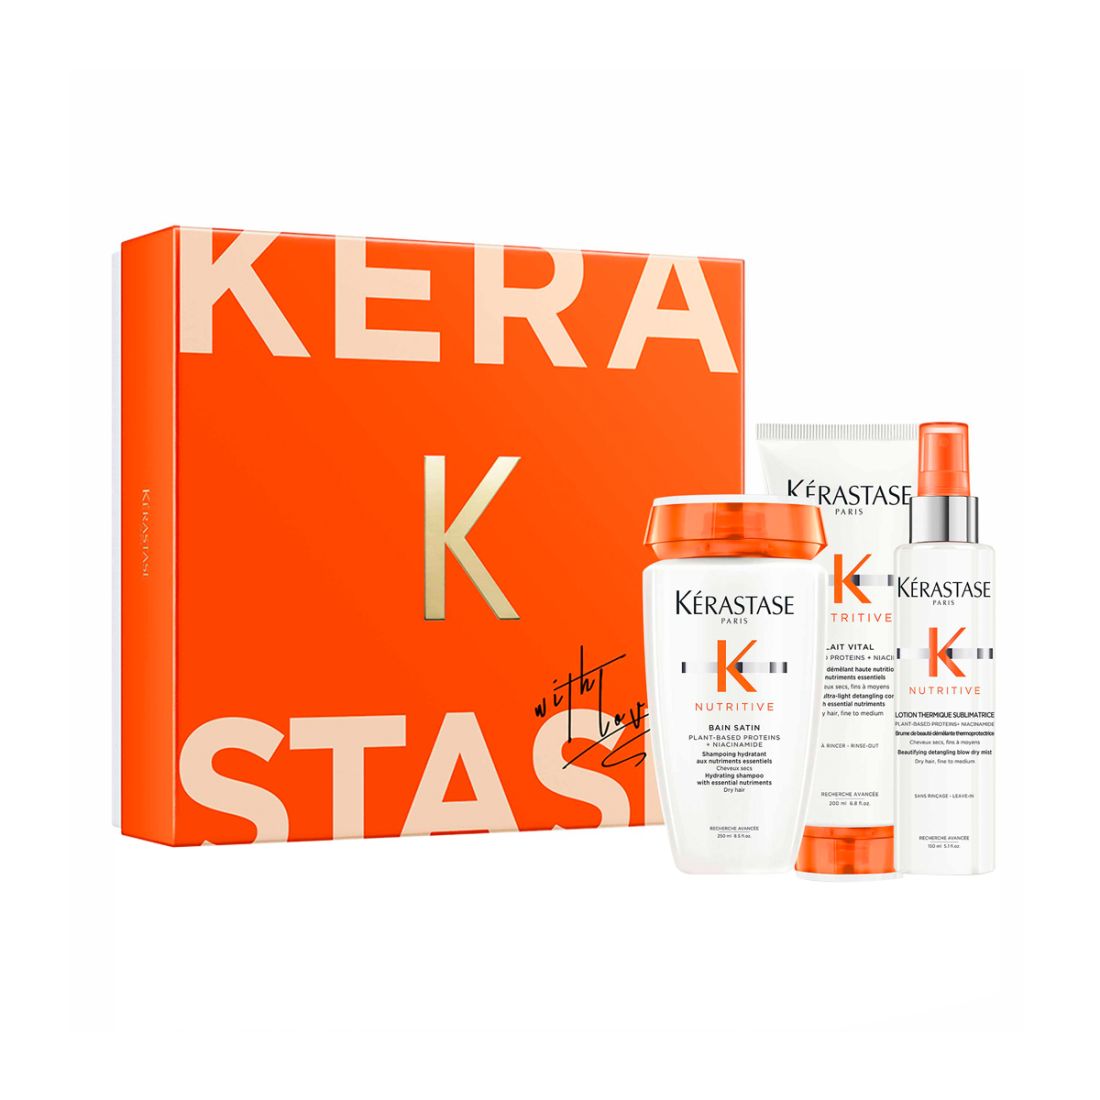 Kerastase Nutritive - Limited Edition Σετ Περιποίησης για Πολύ Ξηρά Μαλλιά με Λεπτή Τρίχα (Bain Satin Riche Shampoo 250ml, Masquintense Hair Mask 200ml, Nectar Thermique Leave-In 150ml)